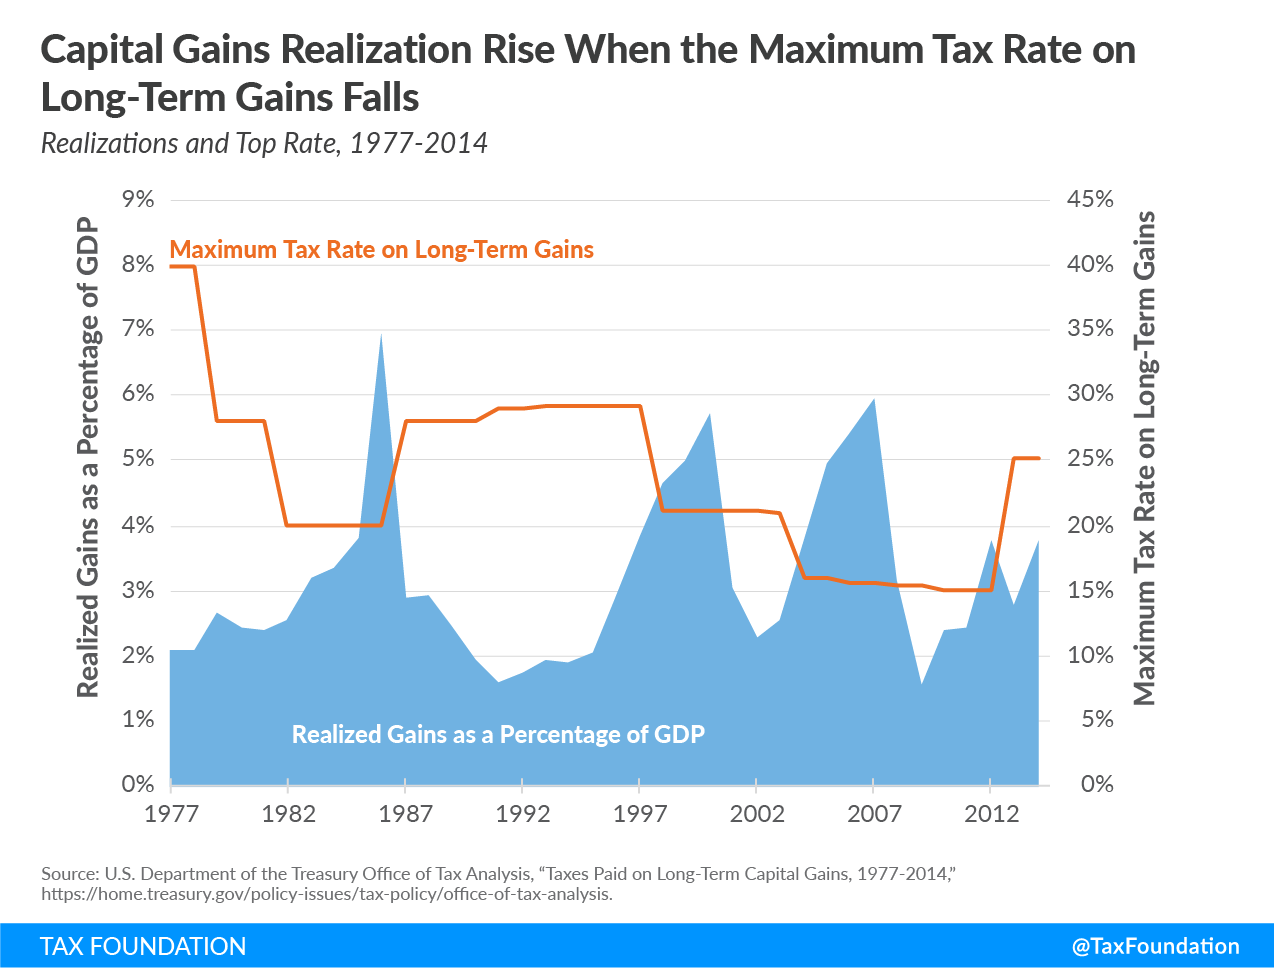 Capital gains realization rise when maximum tax rate on long-term gains falls, capital gains tax